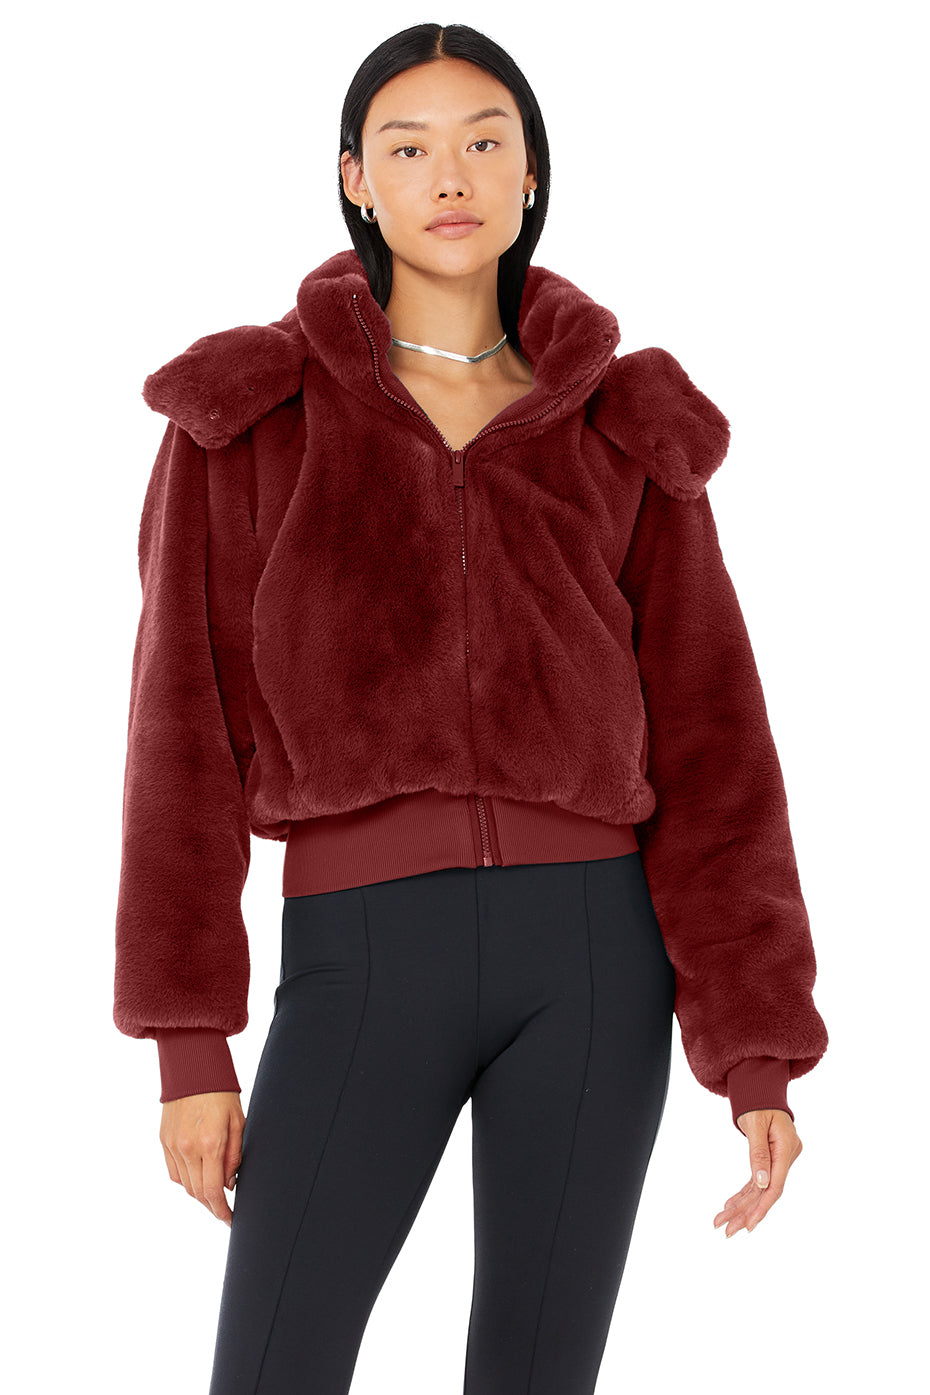 Faux Fur Foxy Jacket in Cranberry by Alo Yoga - International